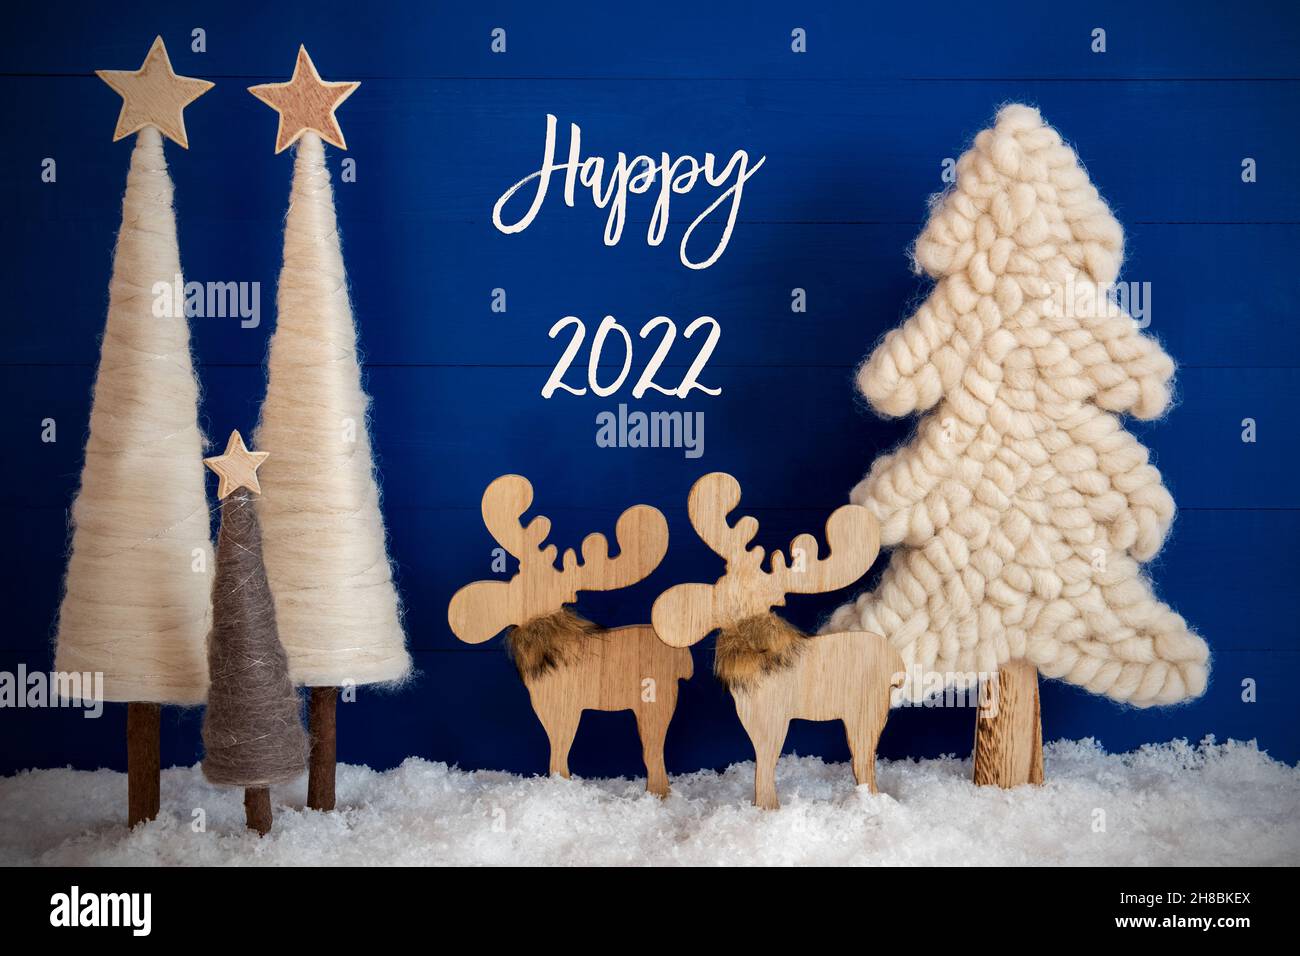 Christmas Tree, Moose, Snow, Text Happy 2022, Blue Background Stock Photo